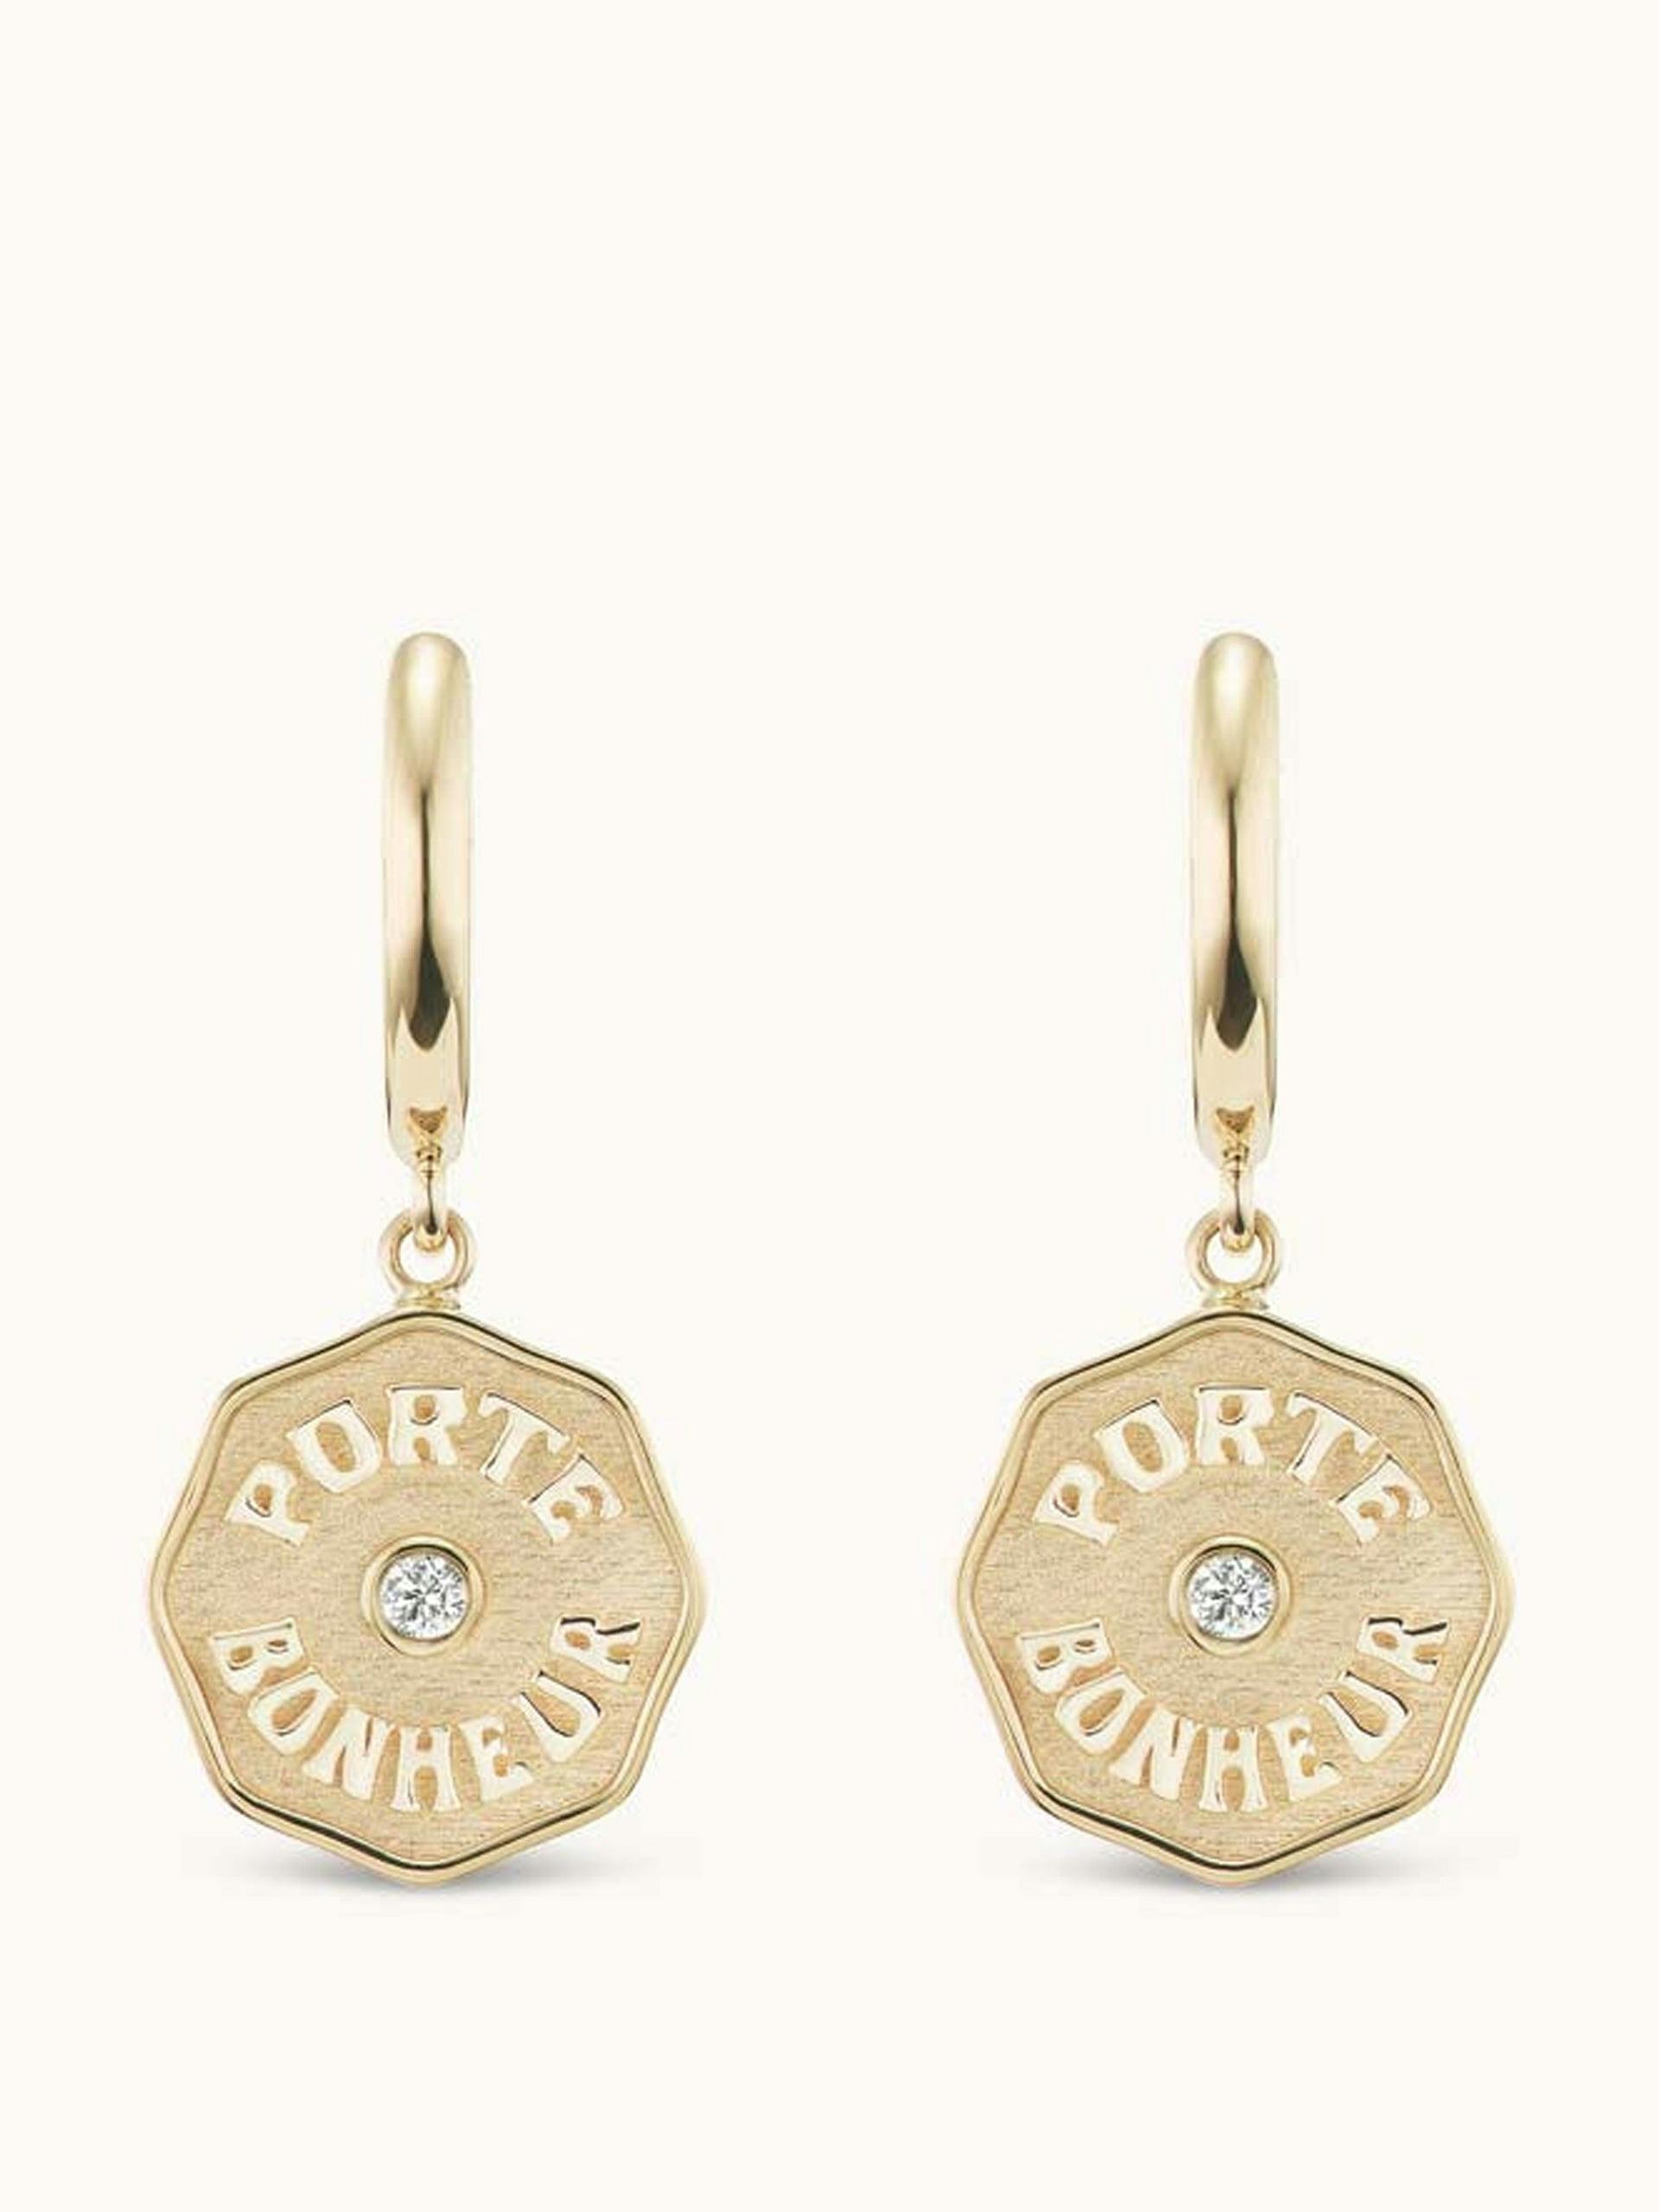 Mini Porte Bonheur earrings in white diamond